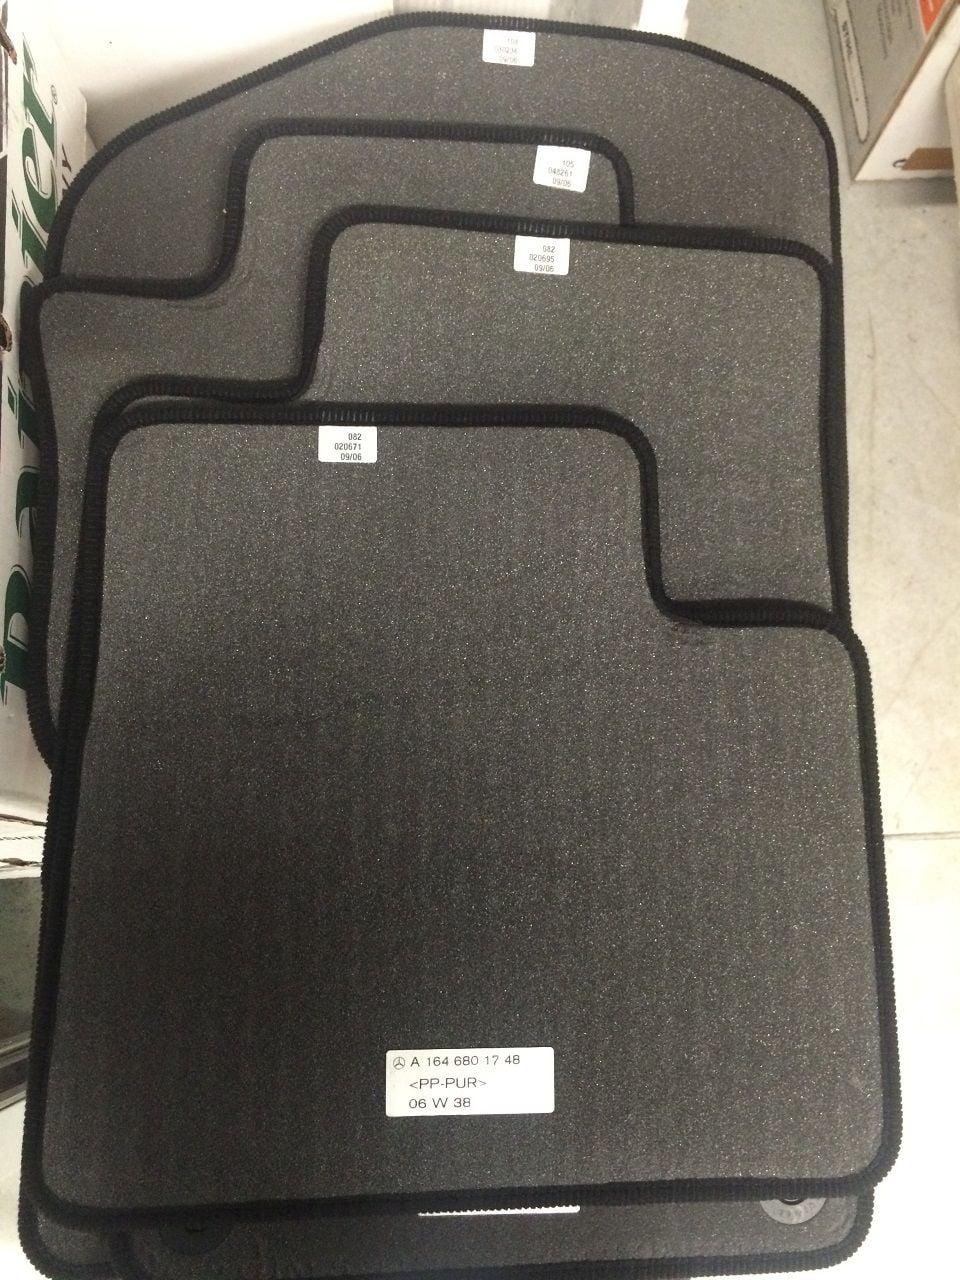 Interior/Upholstery - FS_Genuine GL450 Carpet Floor Mats, Brand New $50 - New - 2007 to 2012 Mercedes-Benz GL450 - Austin, TX 78701, United States